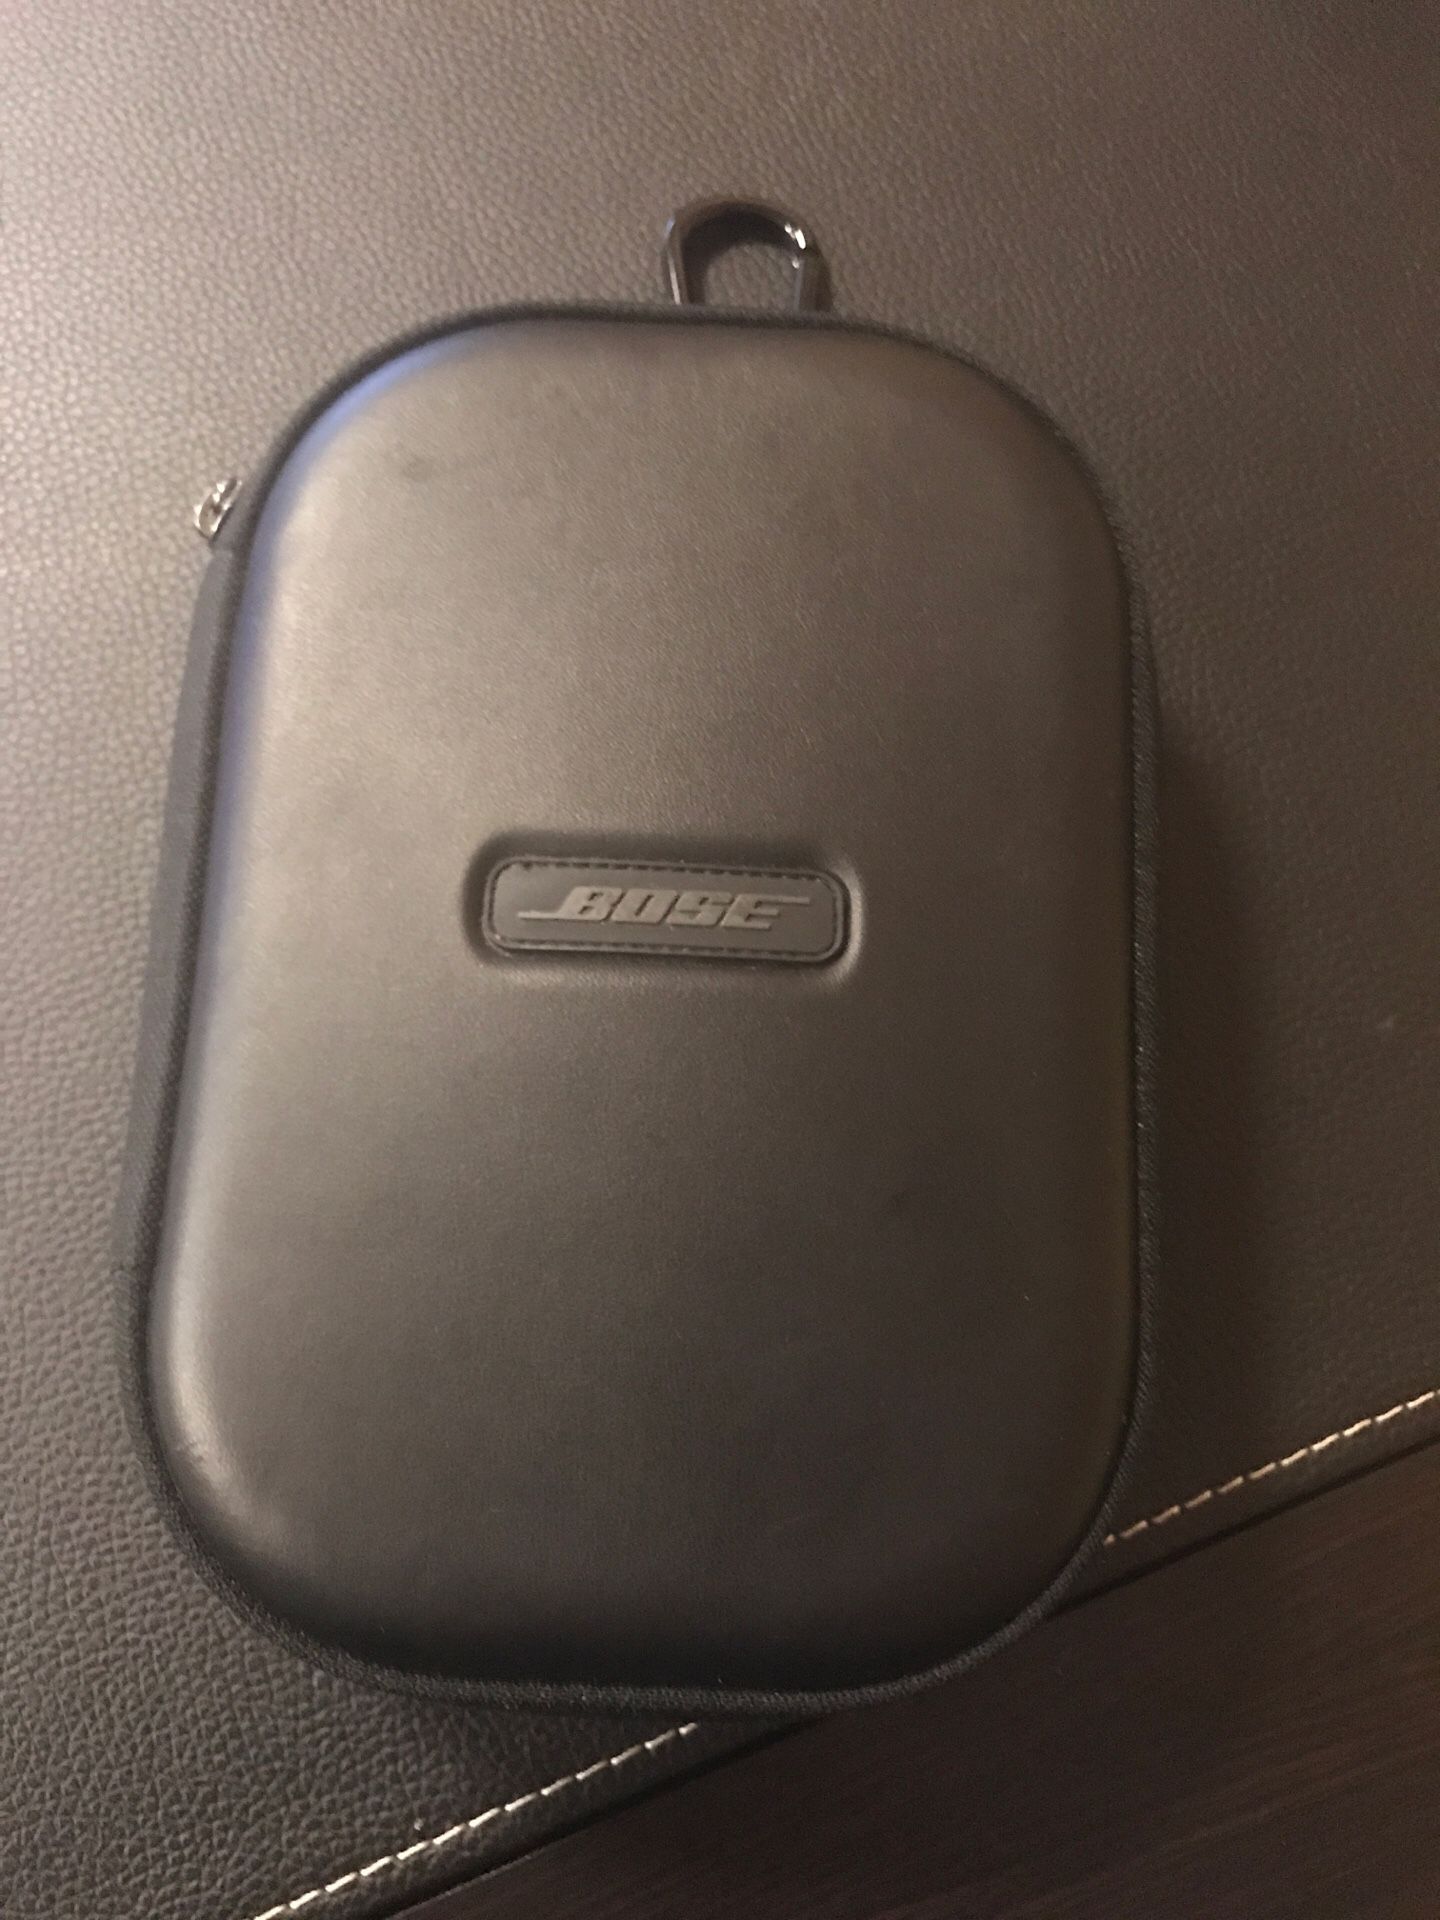 Bose quiet comfort headphones (wireless, noise cancelling, bluetooth)